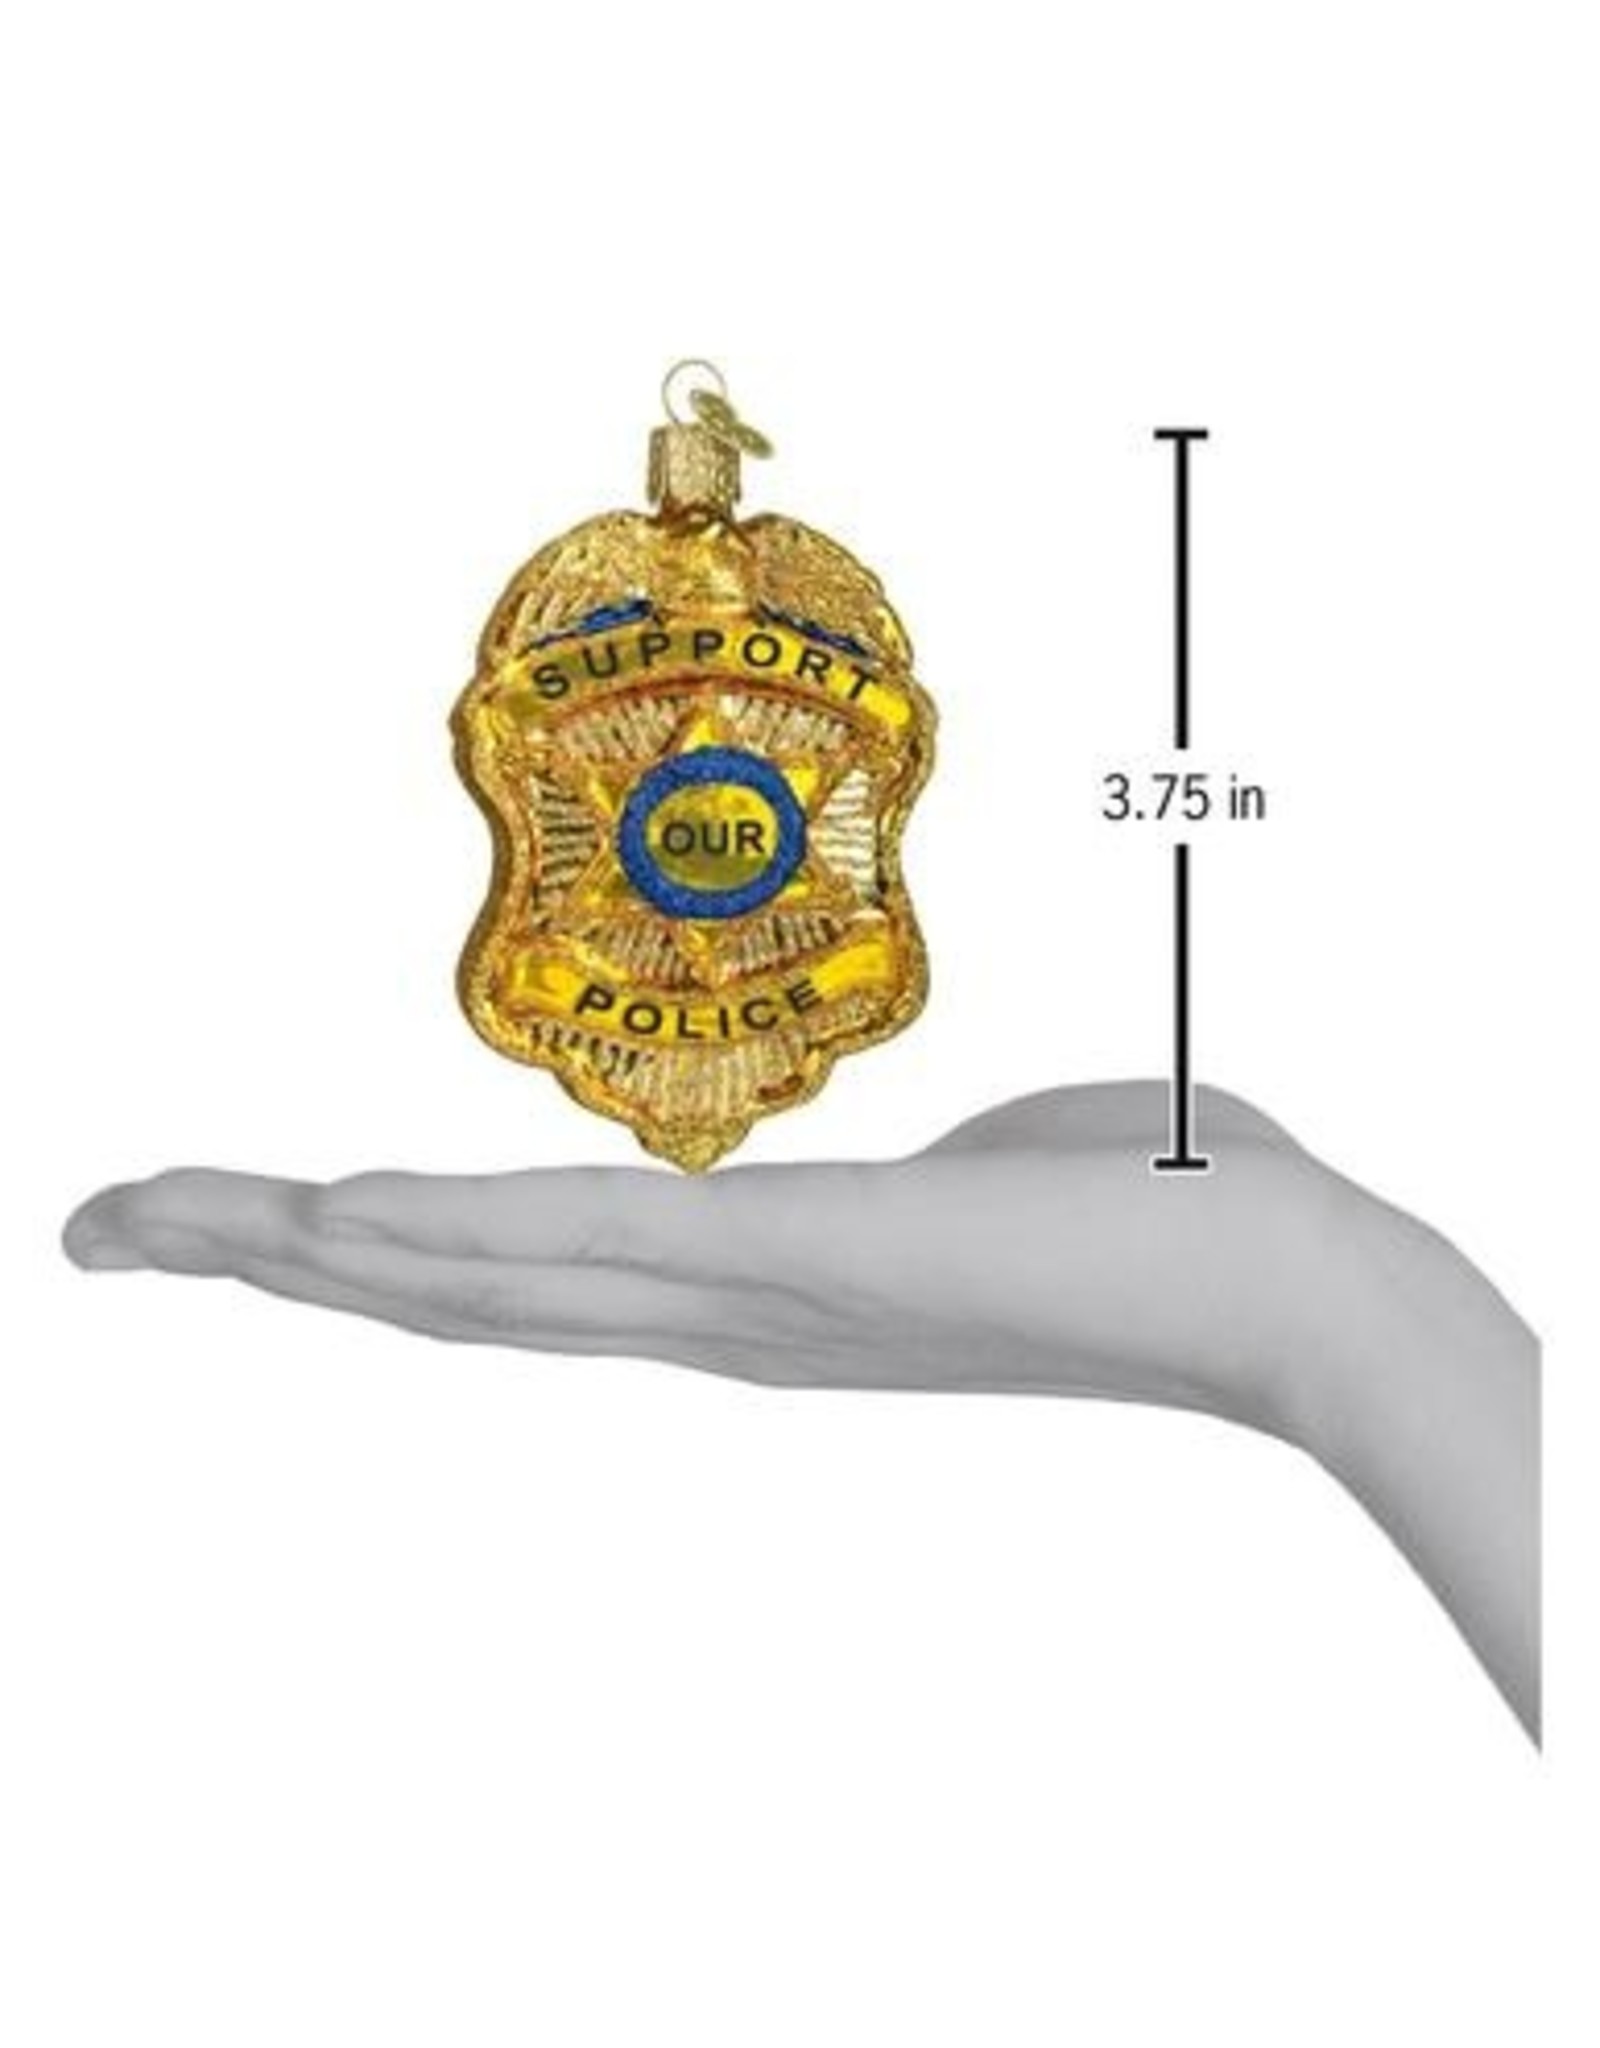 Old World Christmas Police Badge Ornament